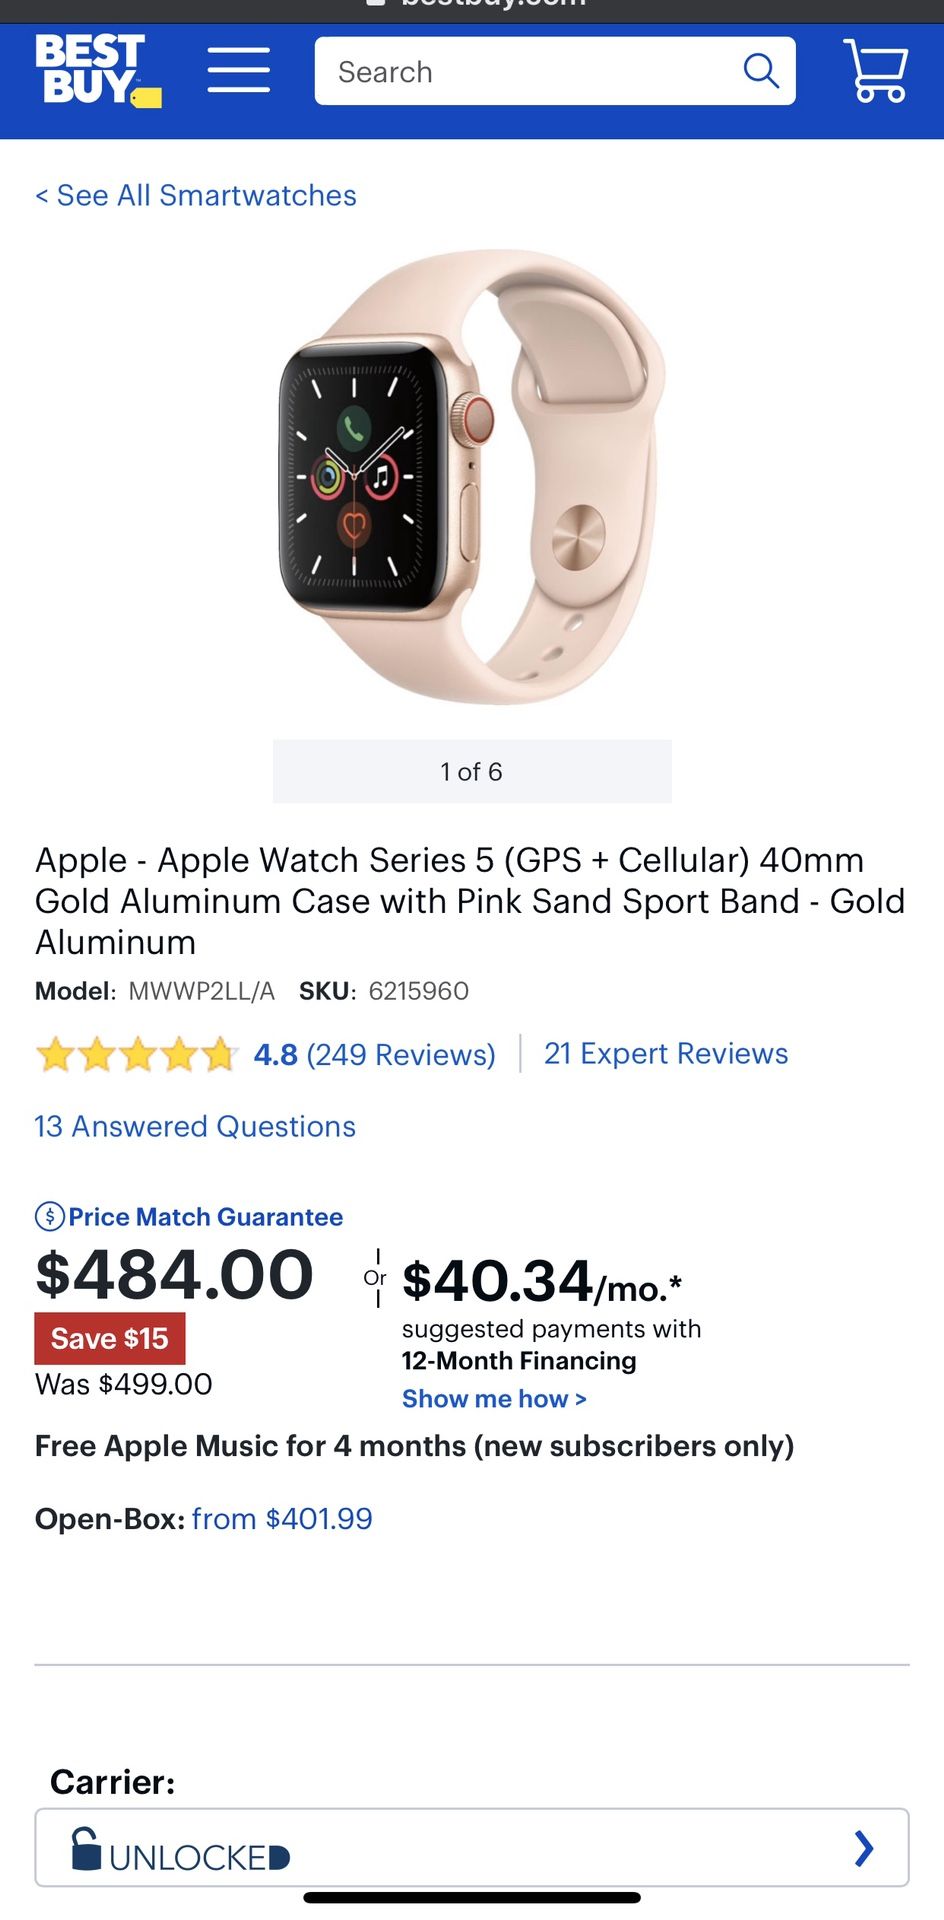 Series 5 Apple Watch (Cellular & Gps)